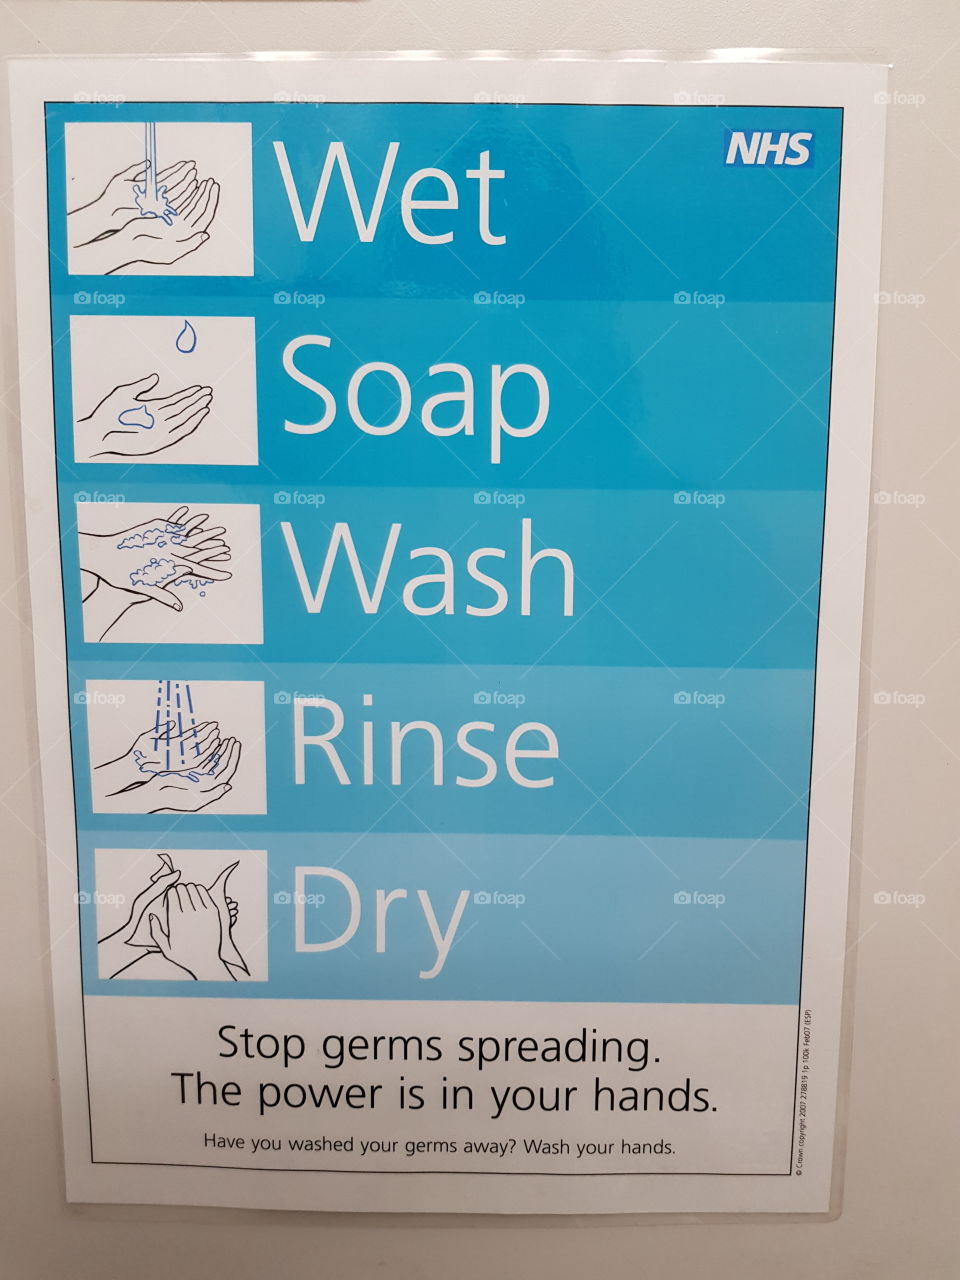 NHS hand hygiene poster